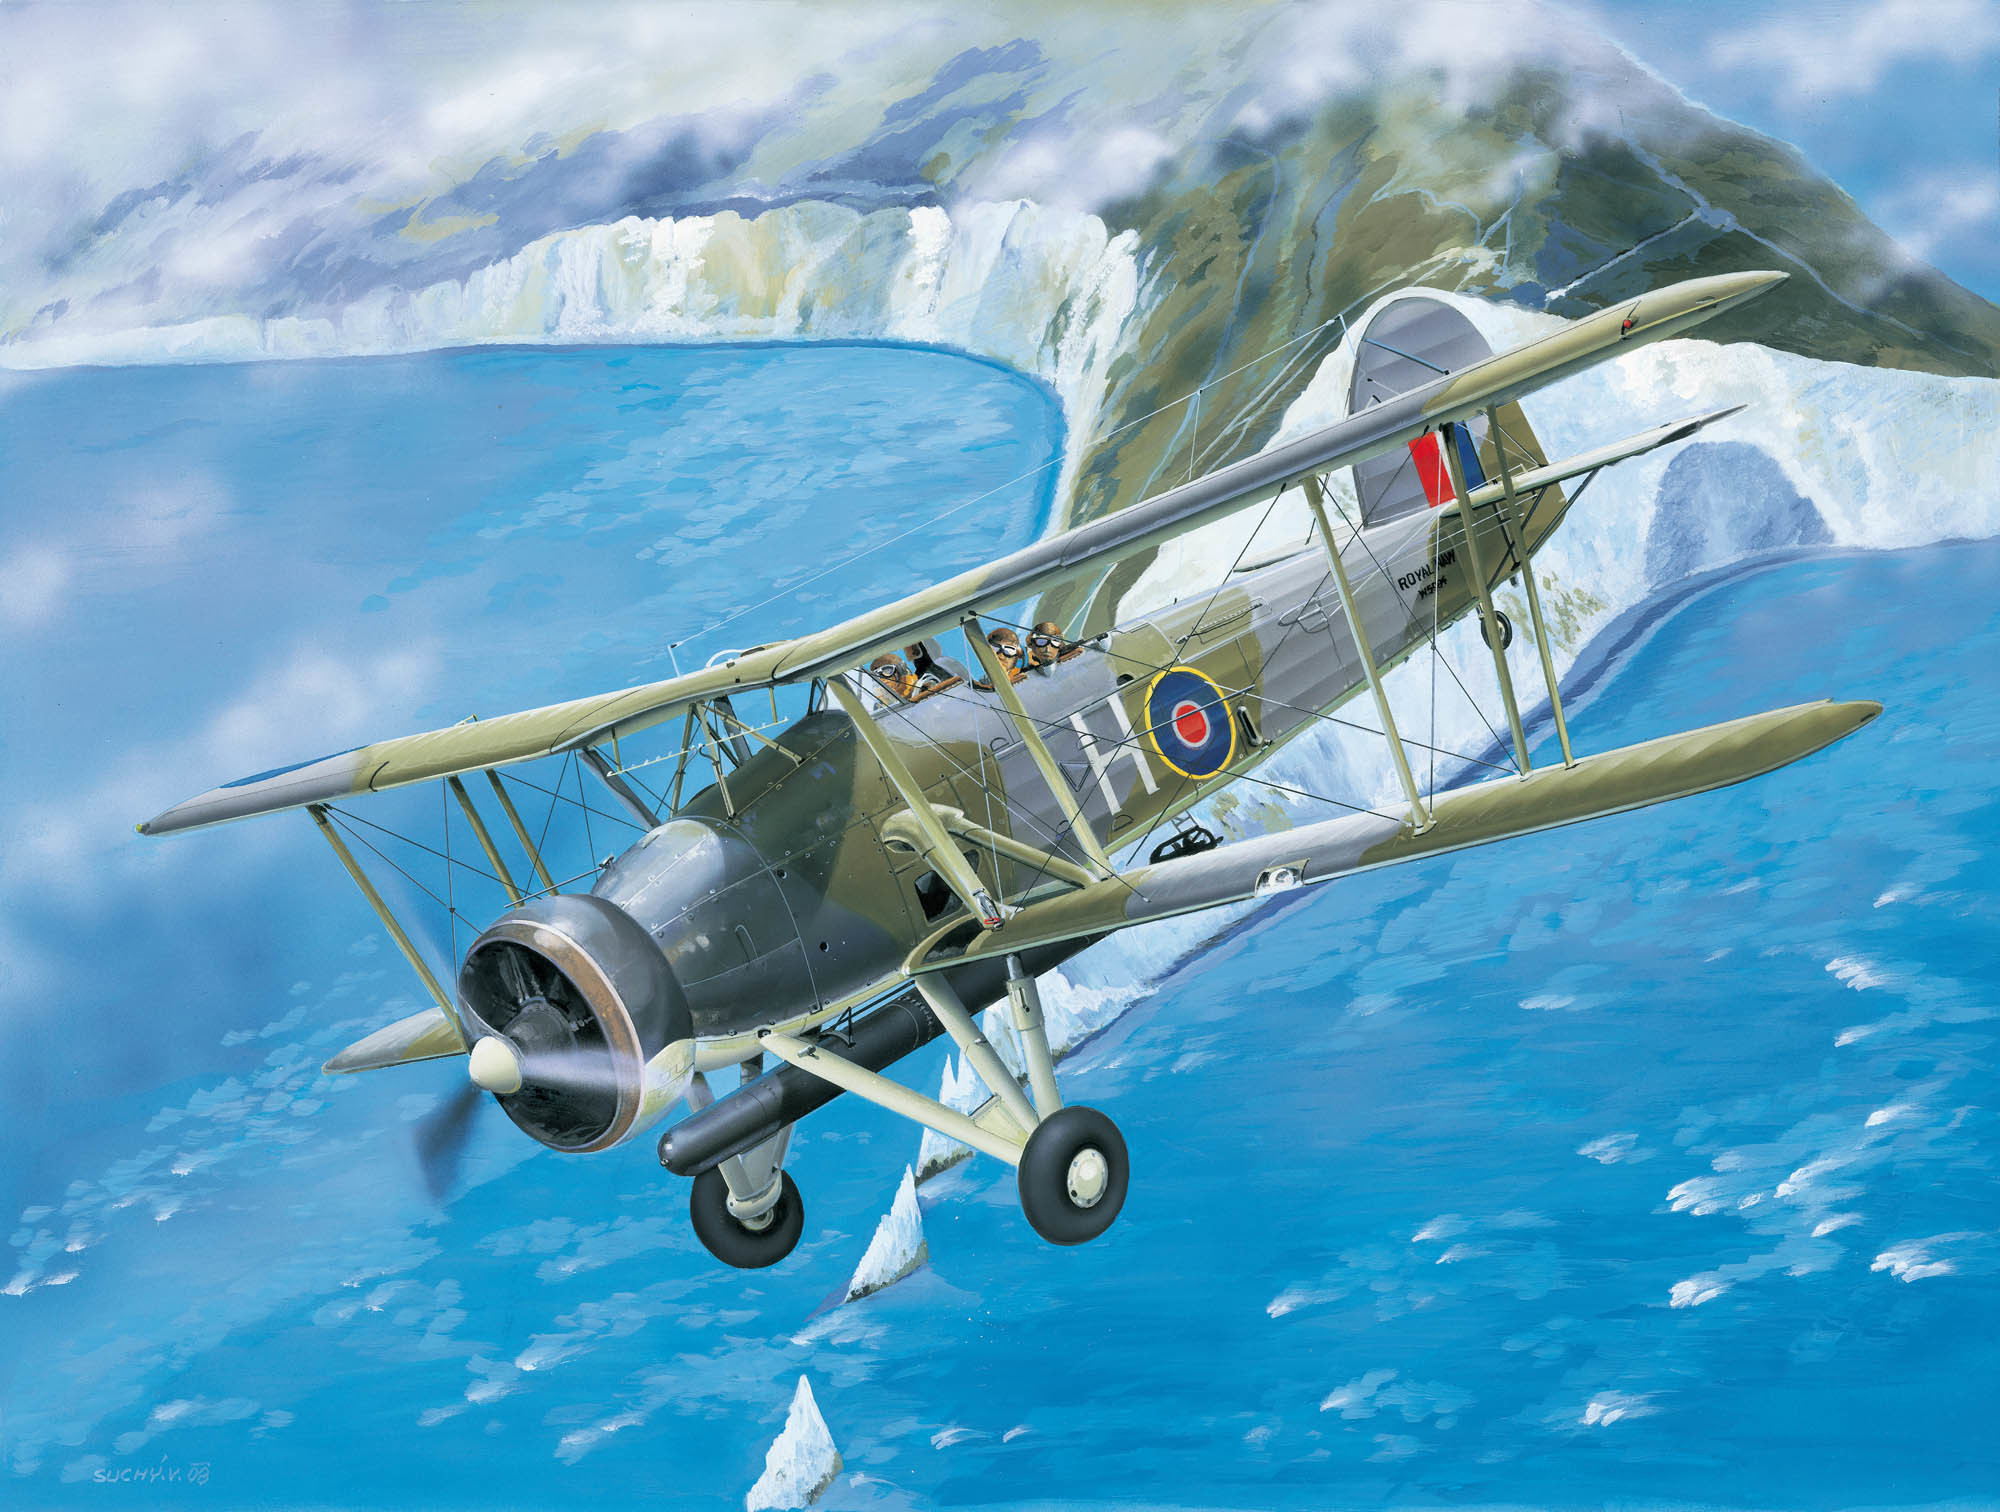 World War Ii Aircraft Airplane War Military Aircraft Military Royal Navy Torpedo Bomber Fairey Sword 2000x1512